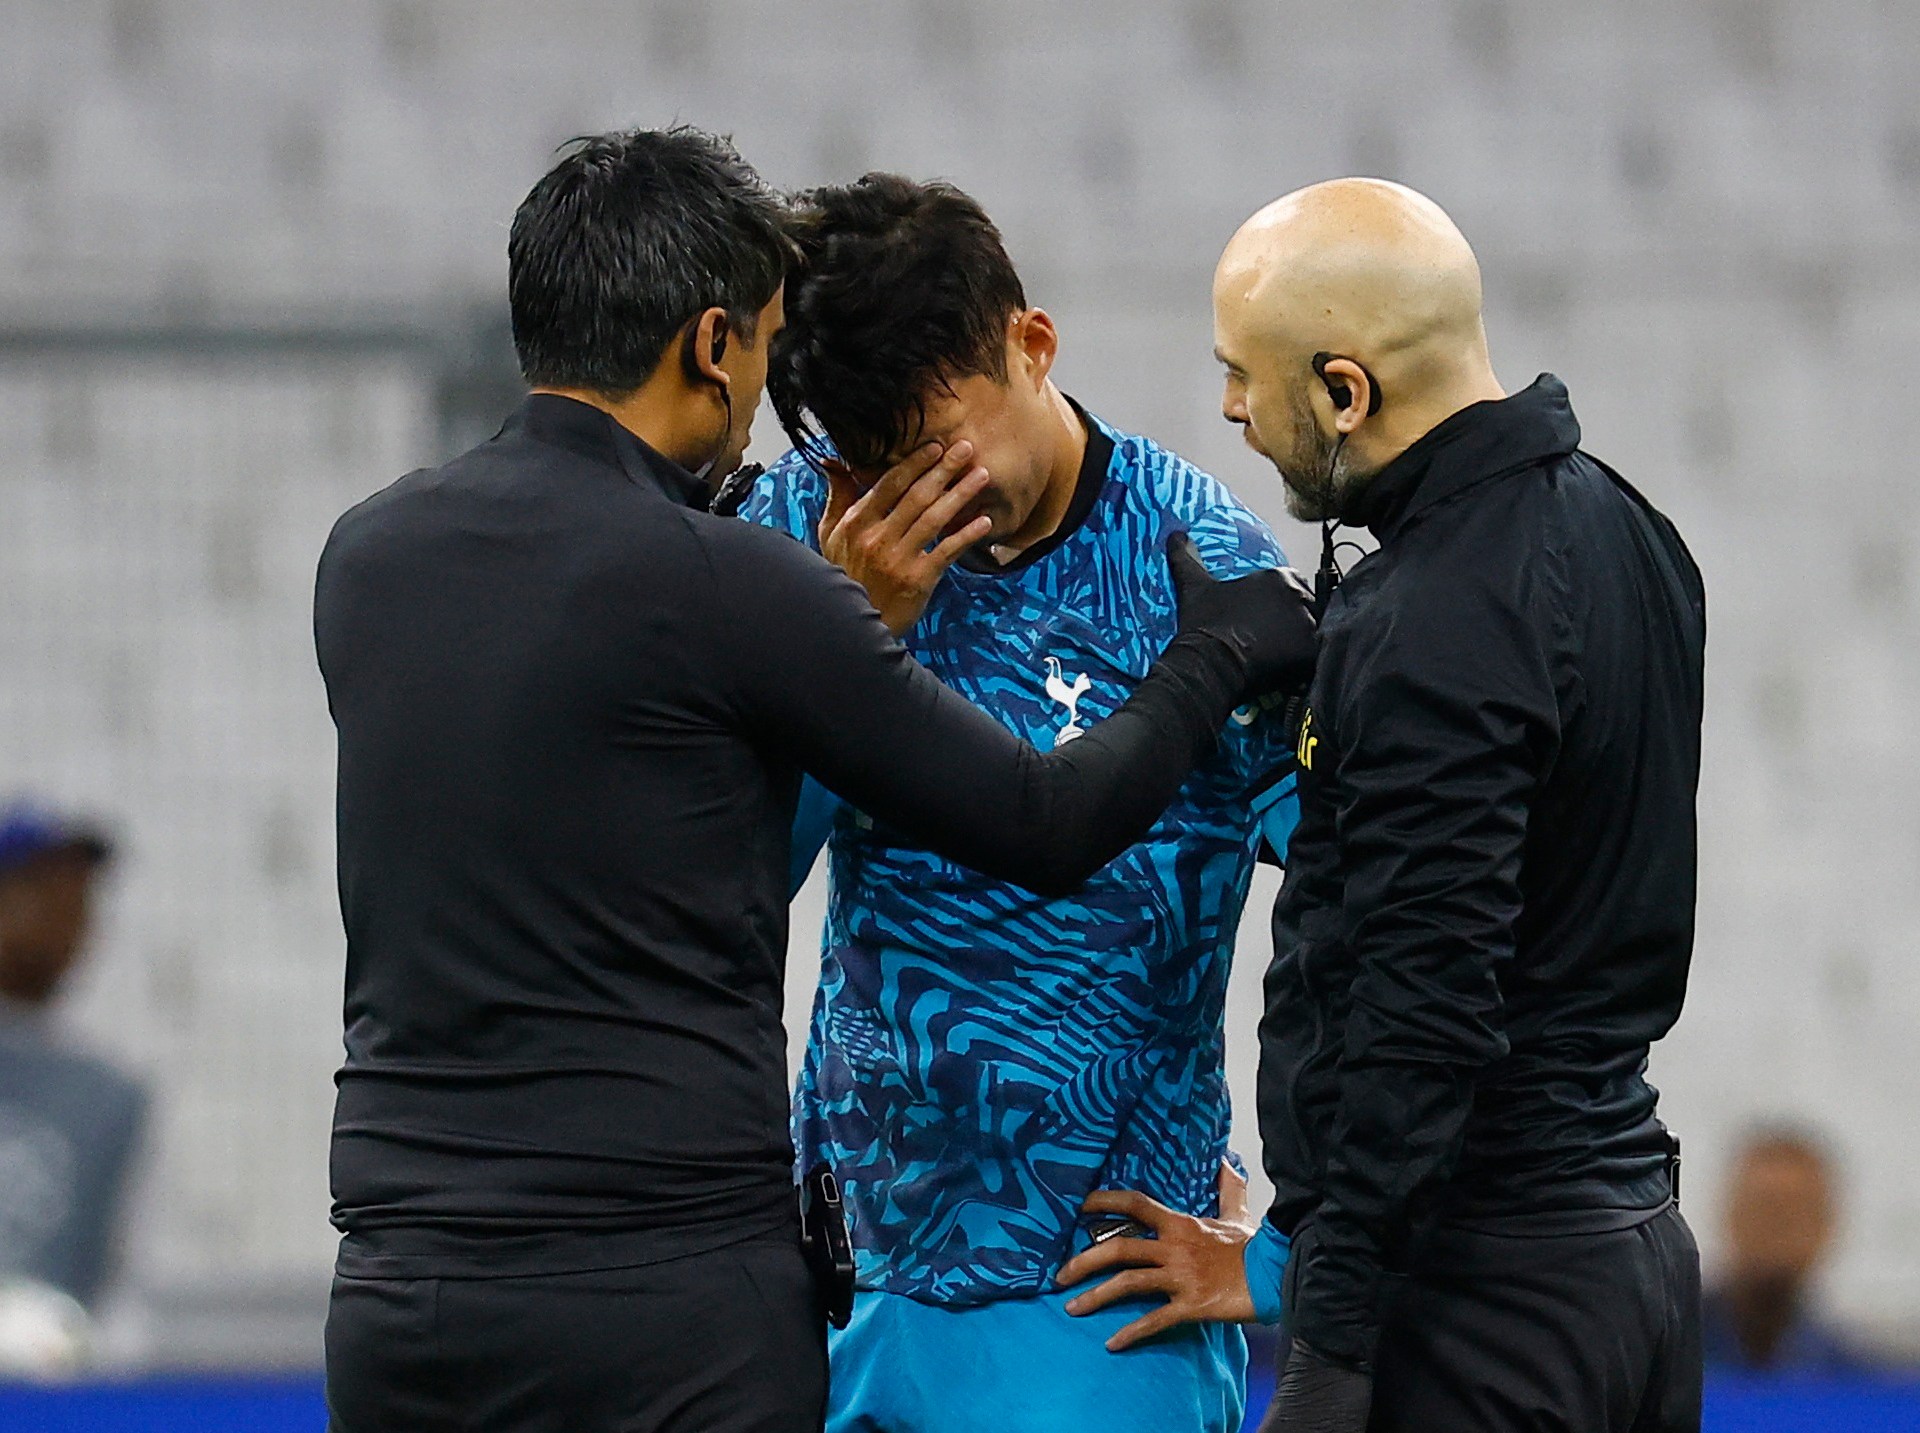 Son Heung-min doubtful for Qatar World Cup after facial injury - Al Jazeera English